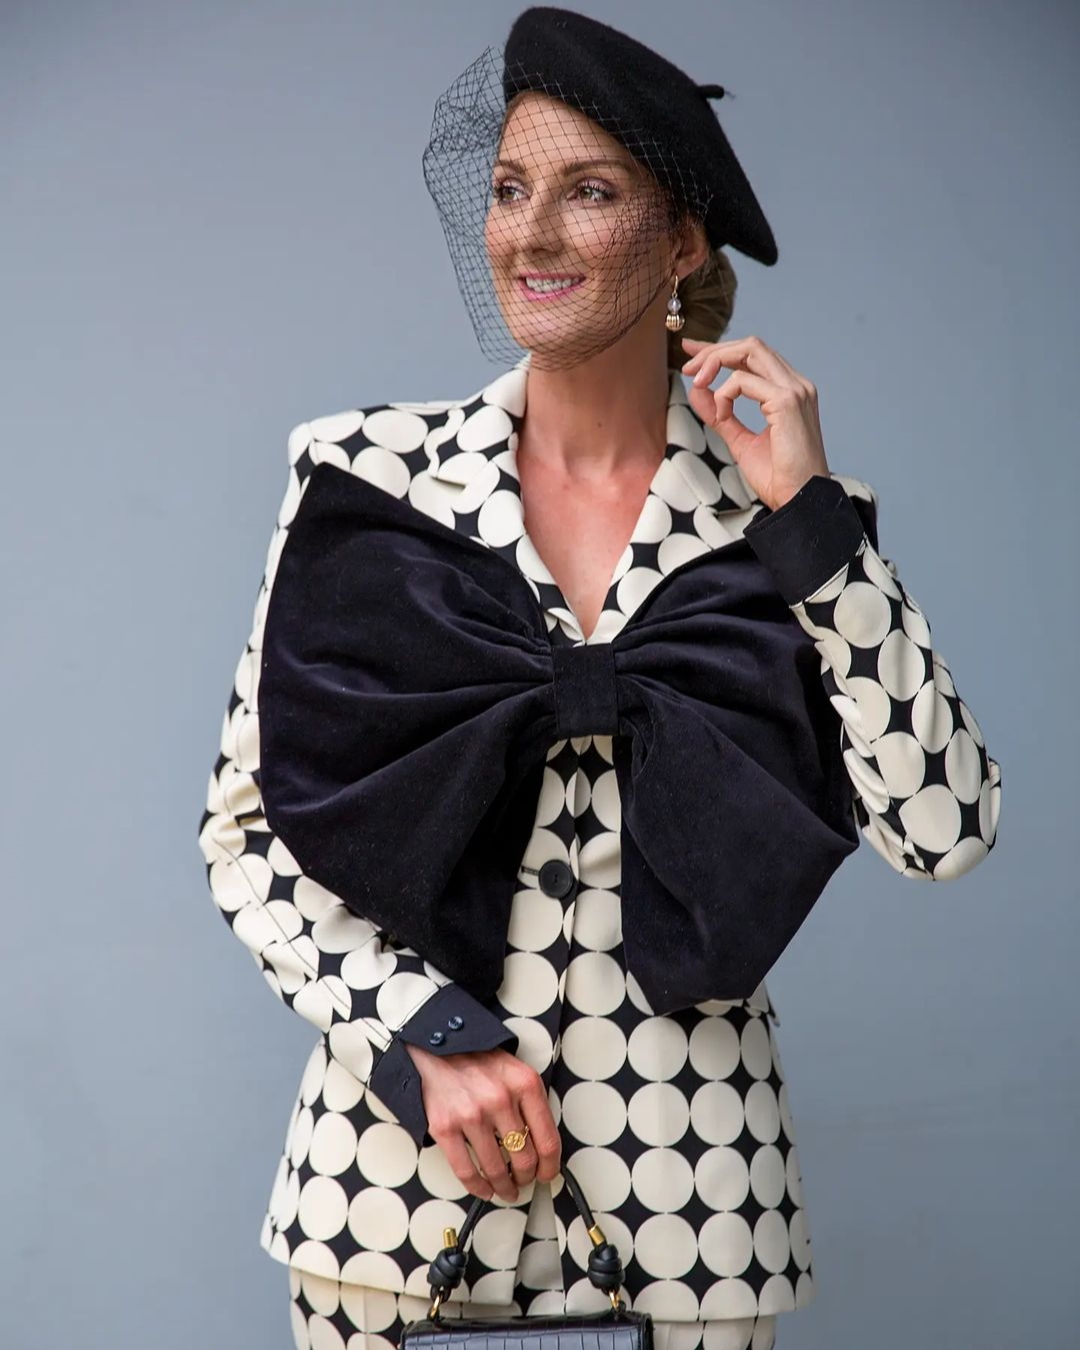 Kerrie Flentjar wearing a custom beret